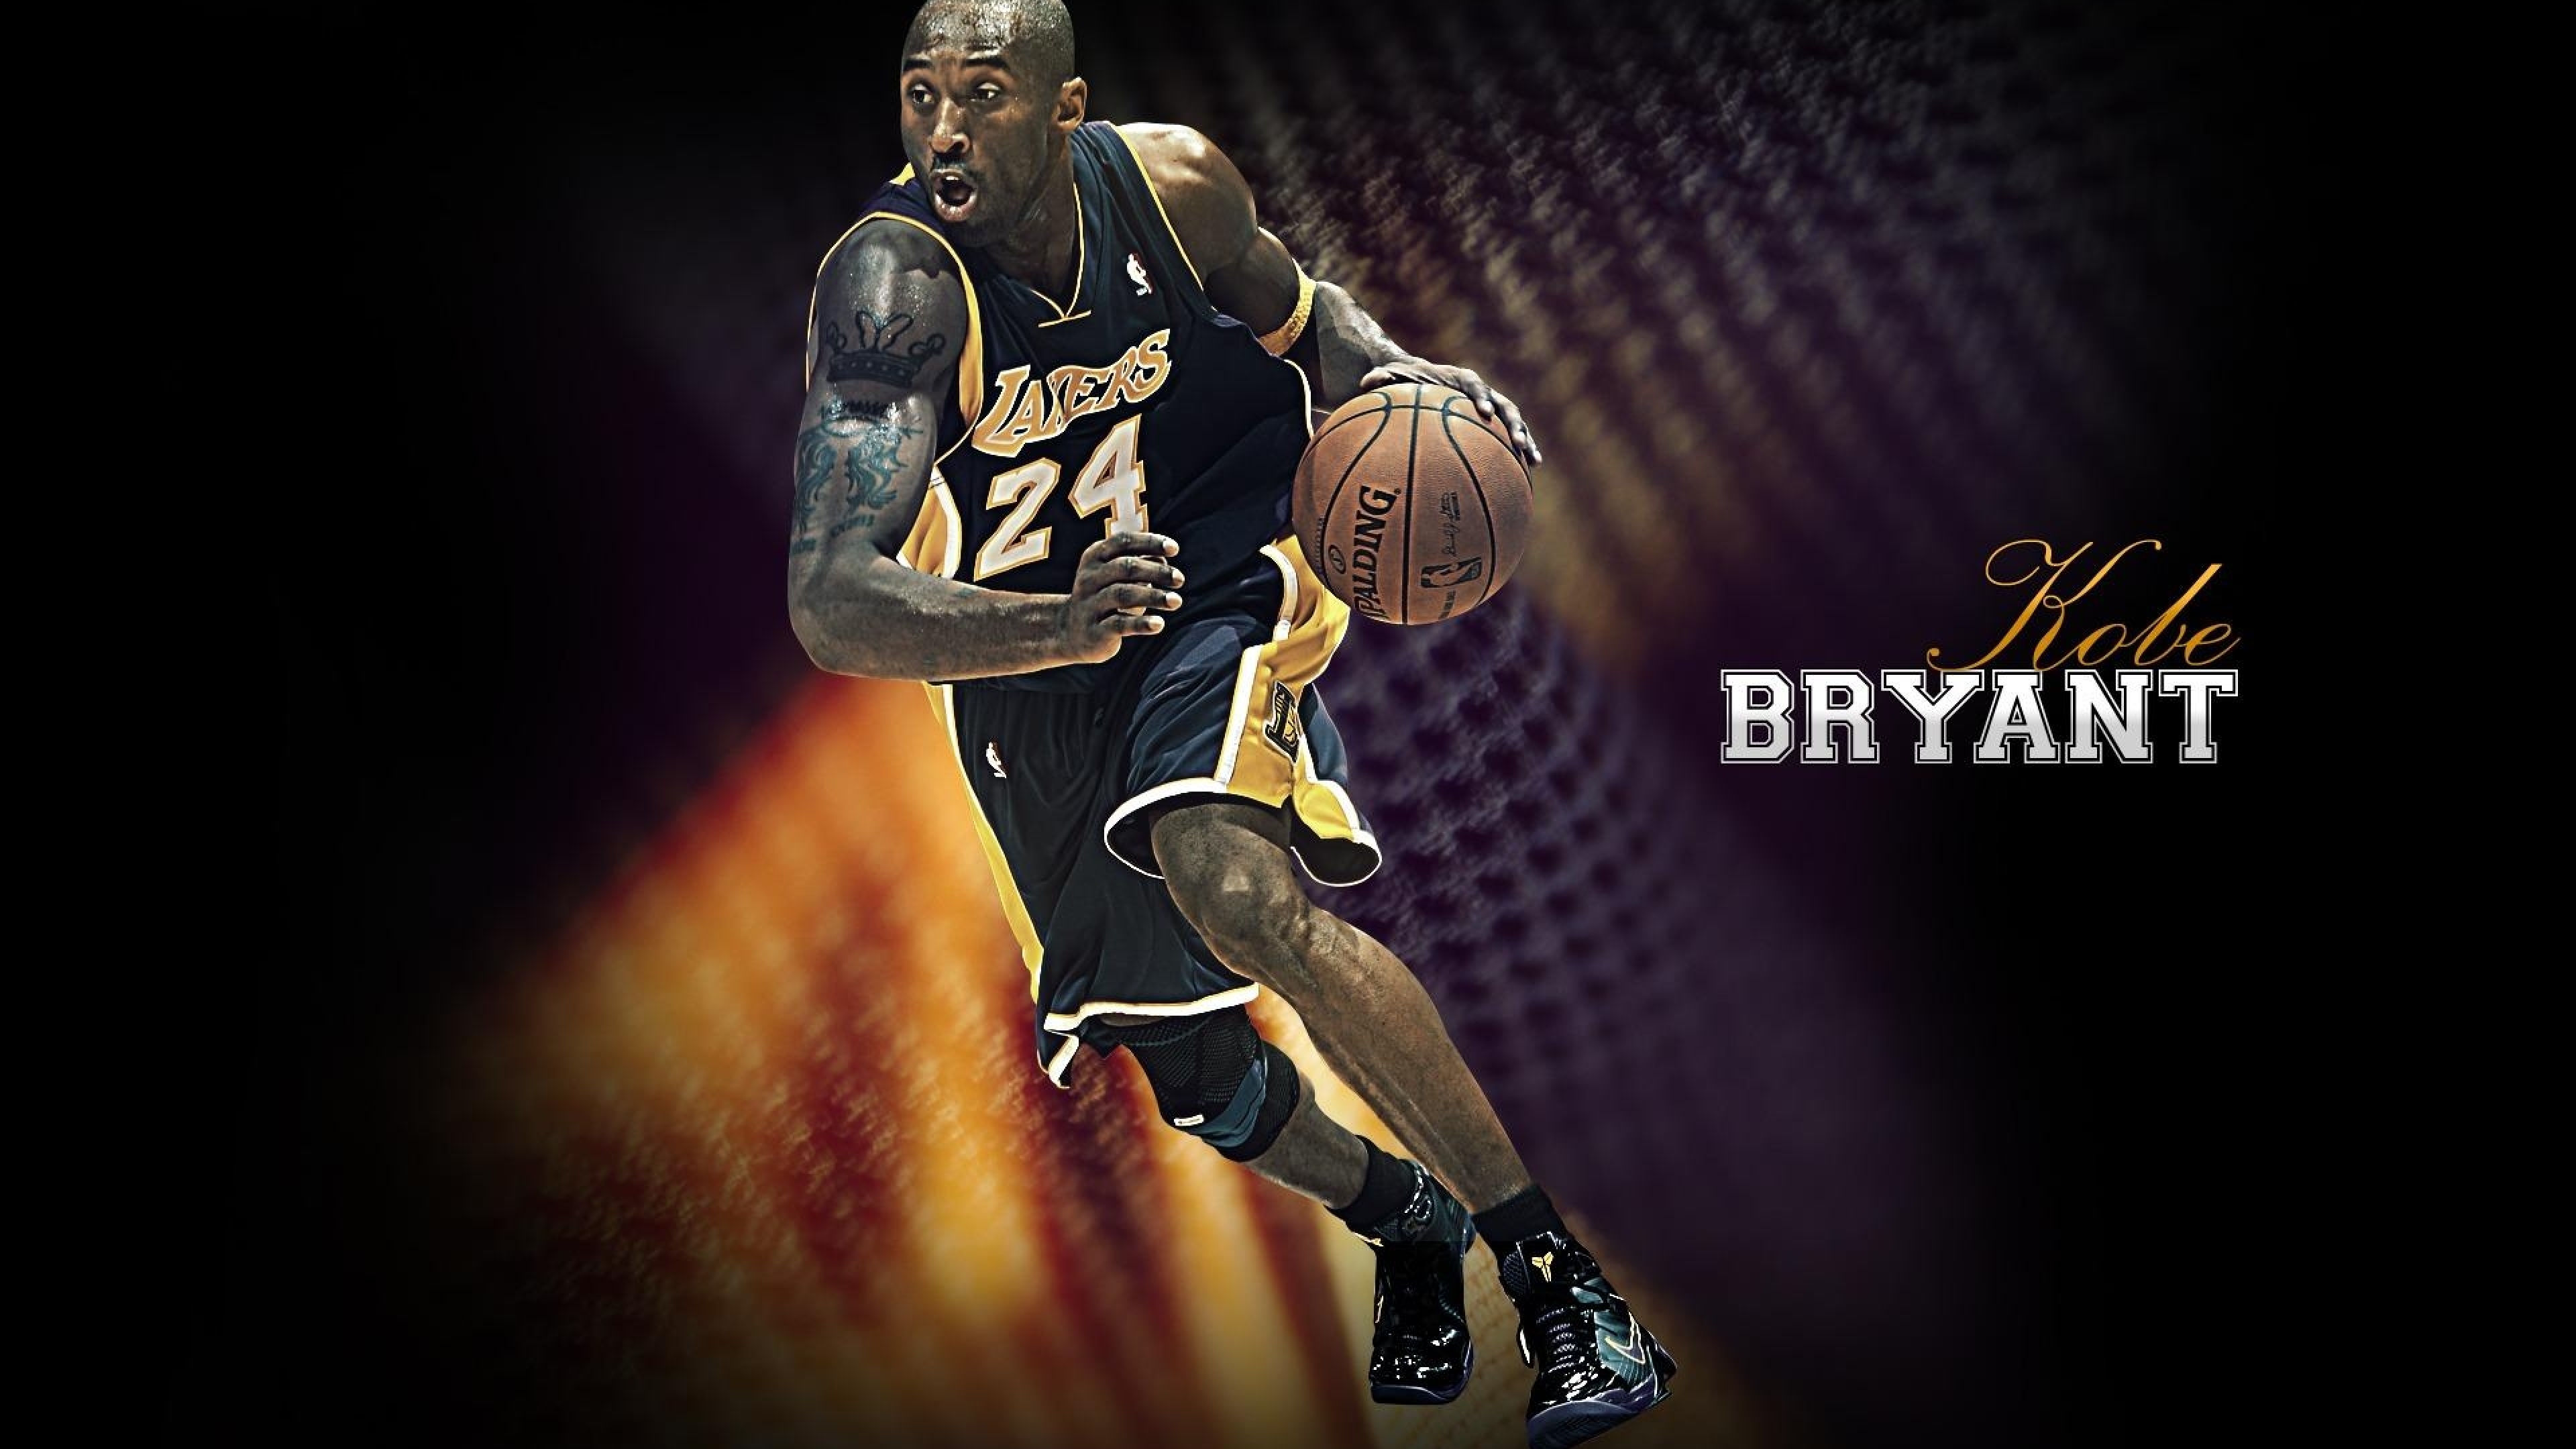 Обои на телефон 24. Kobe Bryant 3/4. Баскетбол Коби Брайант. Коби Брайант в Kobe 4.